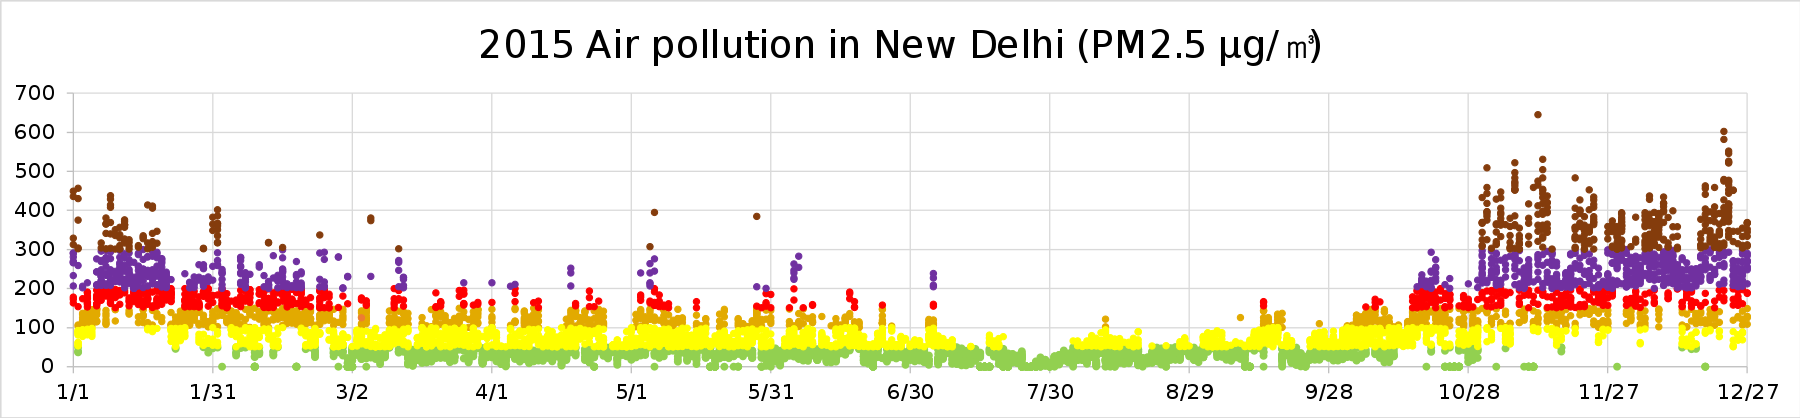 2015 Air pollution in New Delhi (PM2.5 AQI) @media(min-width:720px){.mw-parser-output .columns-start .column{float:left;min-width:20em}.mw-parser-output .columns-2 .column{width:50%}.mw-parser-output .columns-3 .column{width:33.3%}.mw-parser-output .columns-4 .column{width:25%}.mw-parser-output .columns-5 .column{width:20%)) .mw-parser-output .legend{page-break-inside:avoid;break-inside:avoid-column}.mw-parser-output .legend-color{display:inline-block;min-width:1.25em;height:1.25em;line-height:1.25;margin:1px 0;text-align:center;border:1px solid black;background-color:transparent;color:black}.mw-parser-output .legend-text{}   Hazardous     Very Unhealthy     Unhealthy     Unhealthy for Sensitive Groups    Moderate     Good